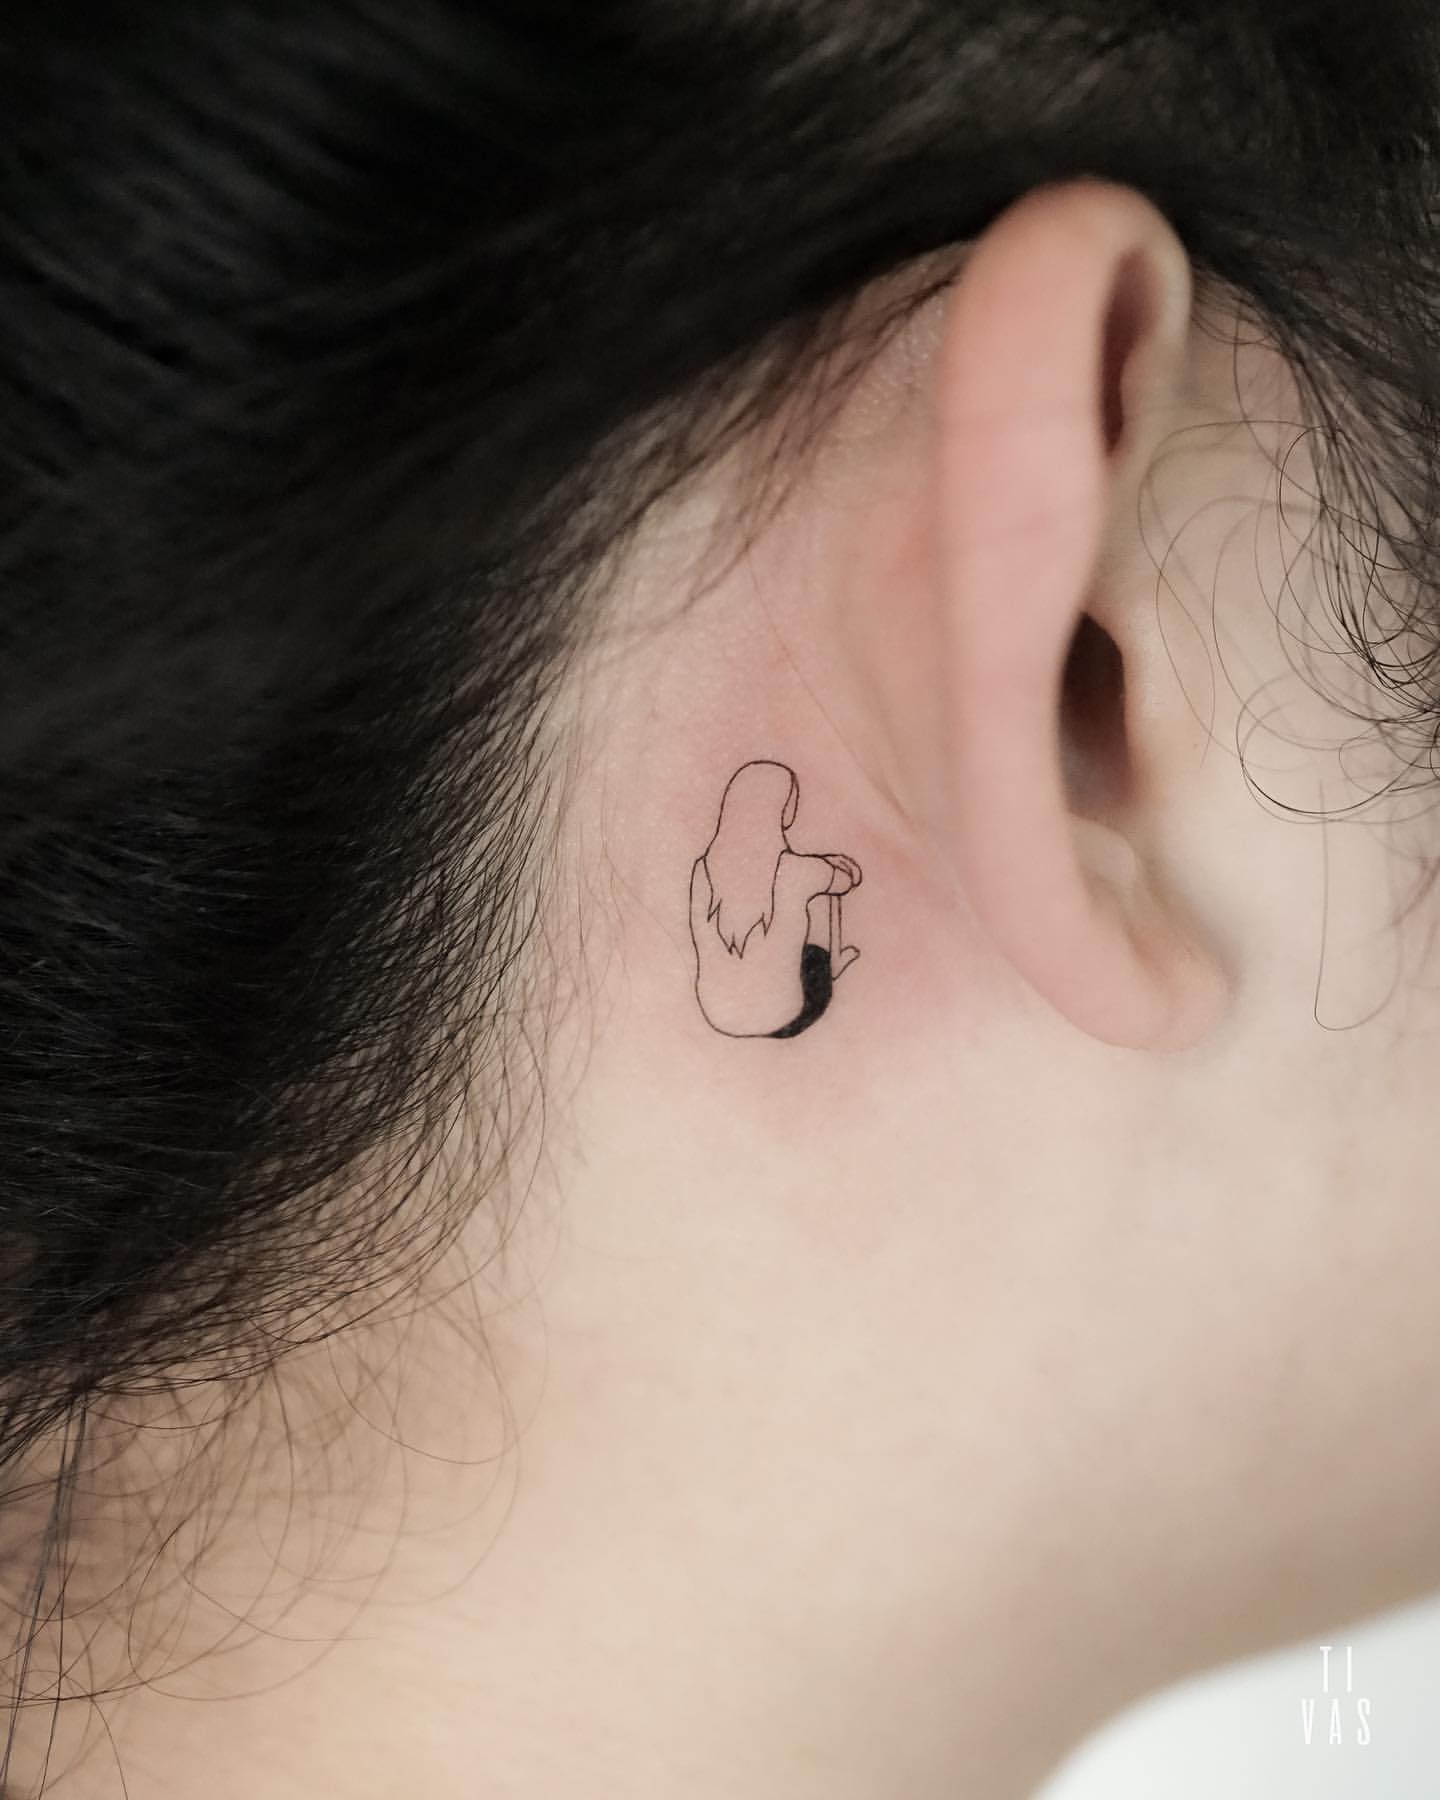 Behind the Ear Tattoos 25